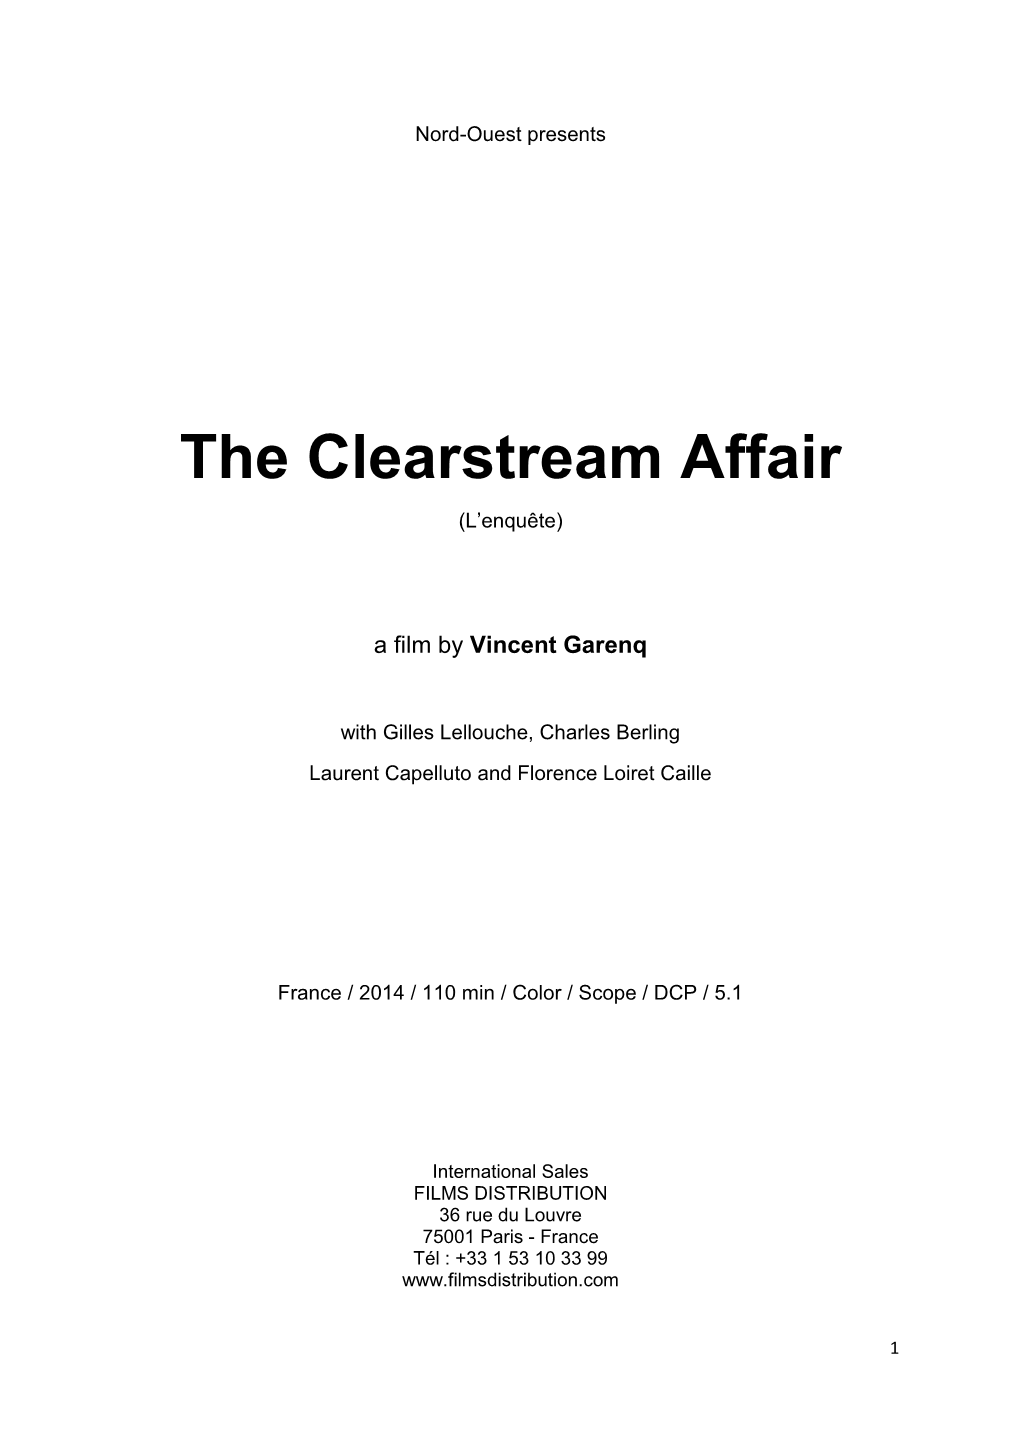 The Clearstream Affair (L’Enquête)